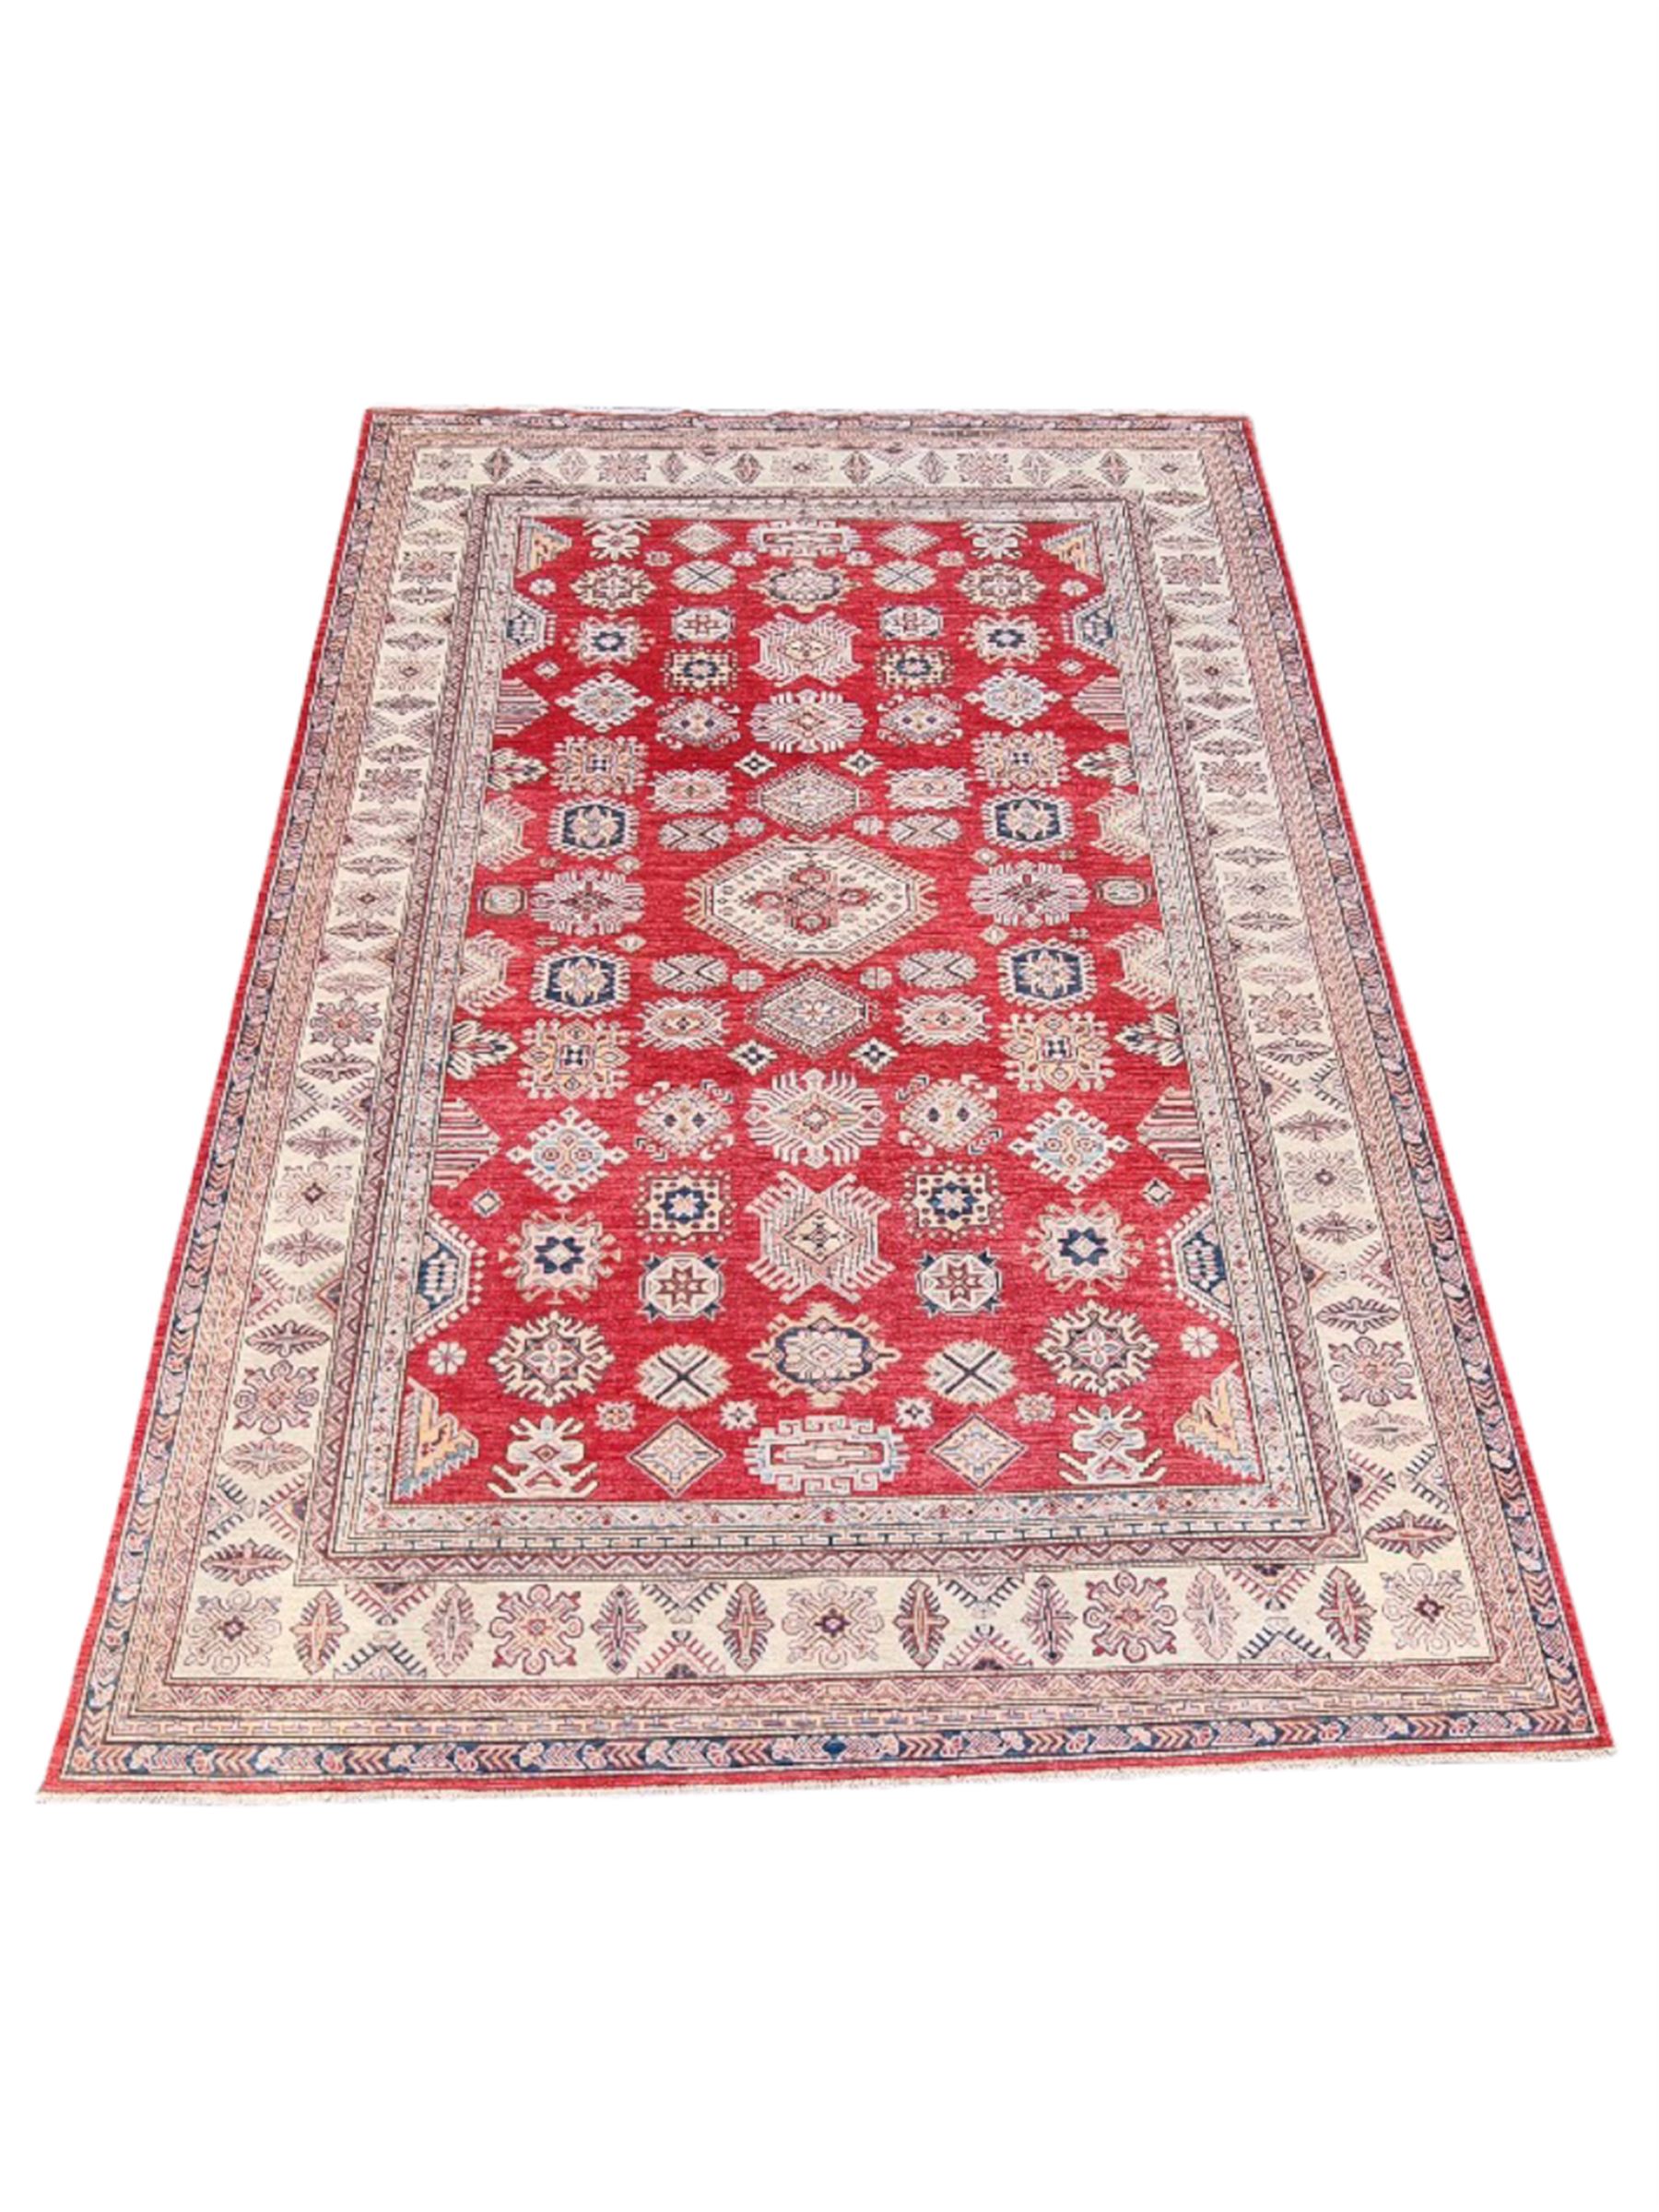 Large red ground carpet - Image 4 of 6